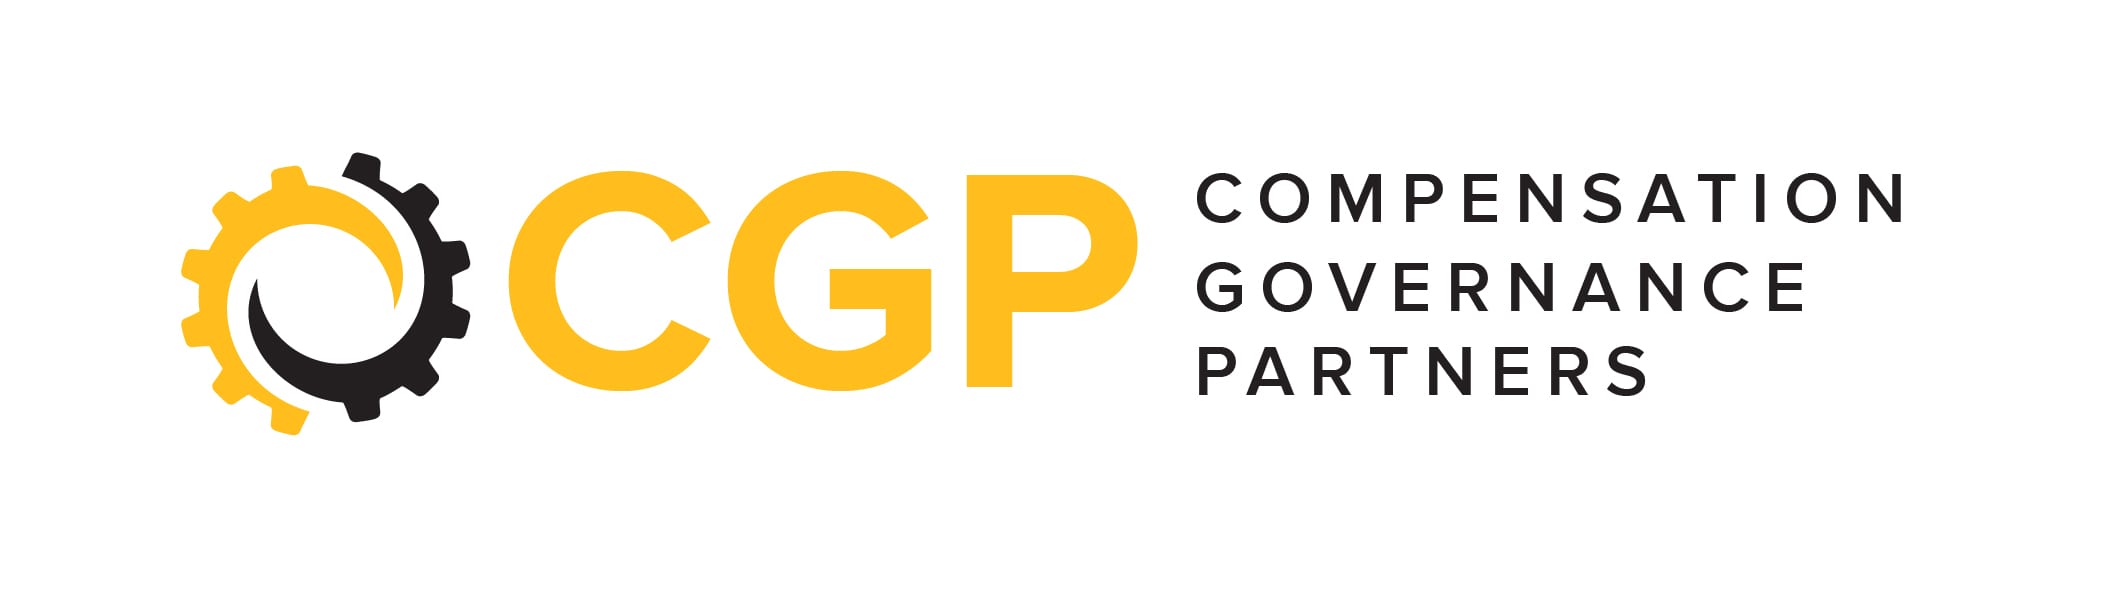 Compensation Governance Partners (CGP)